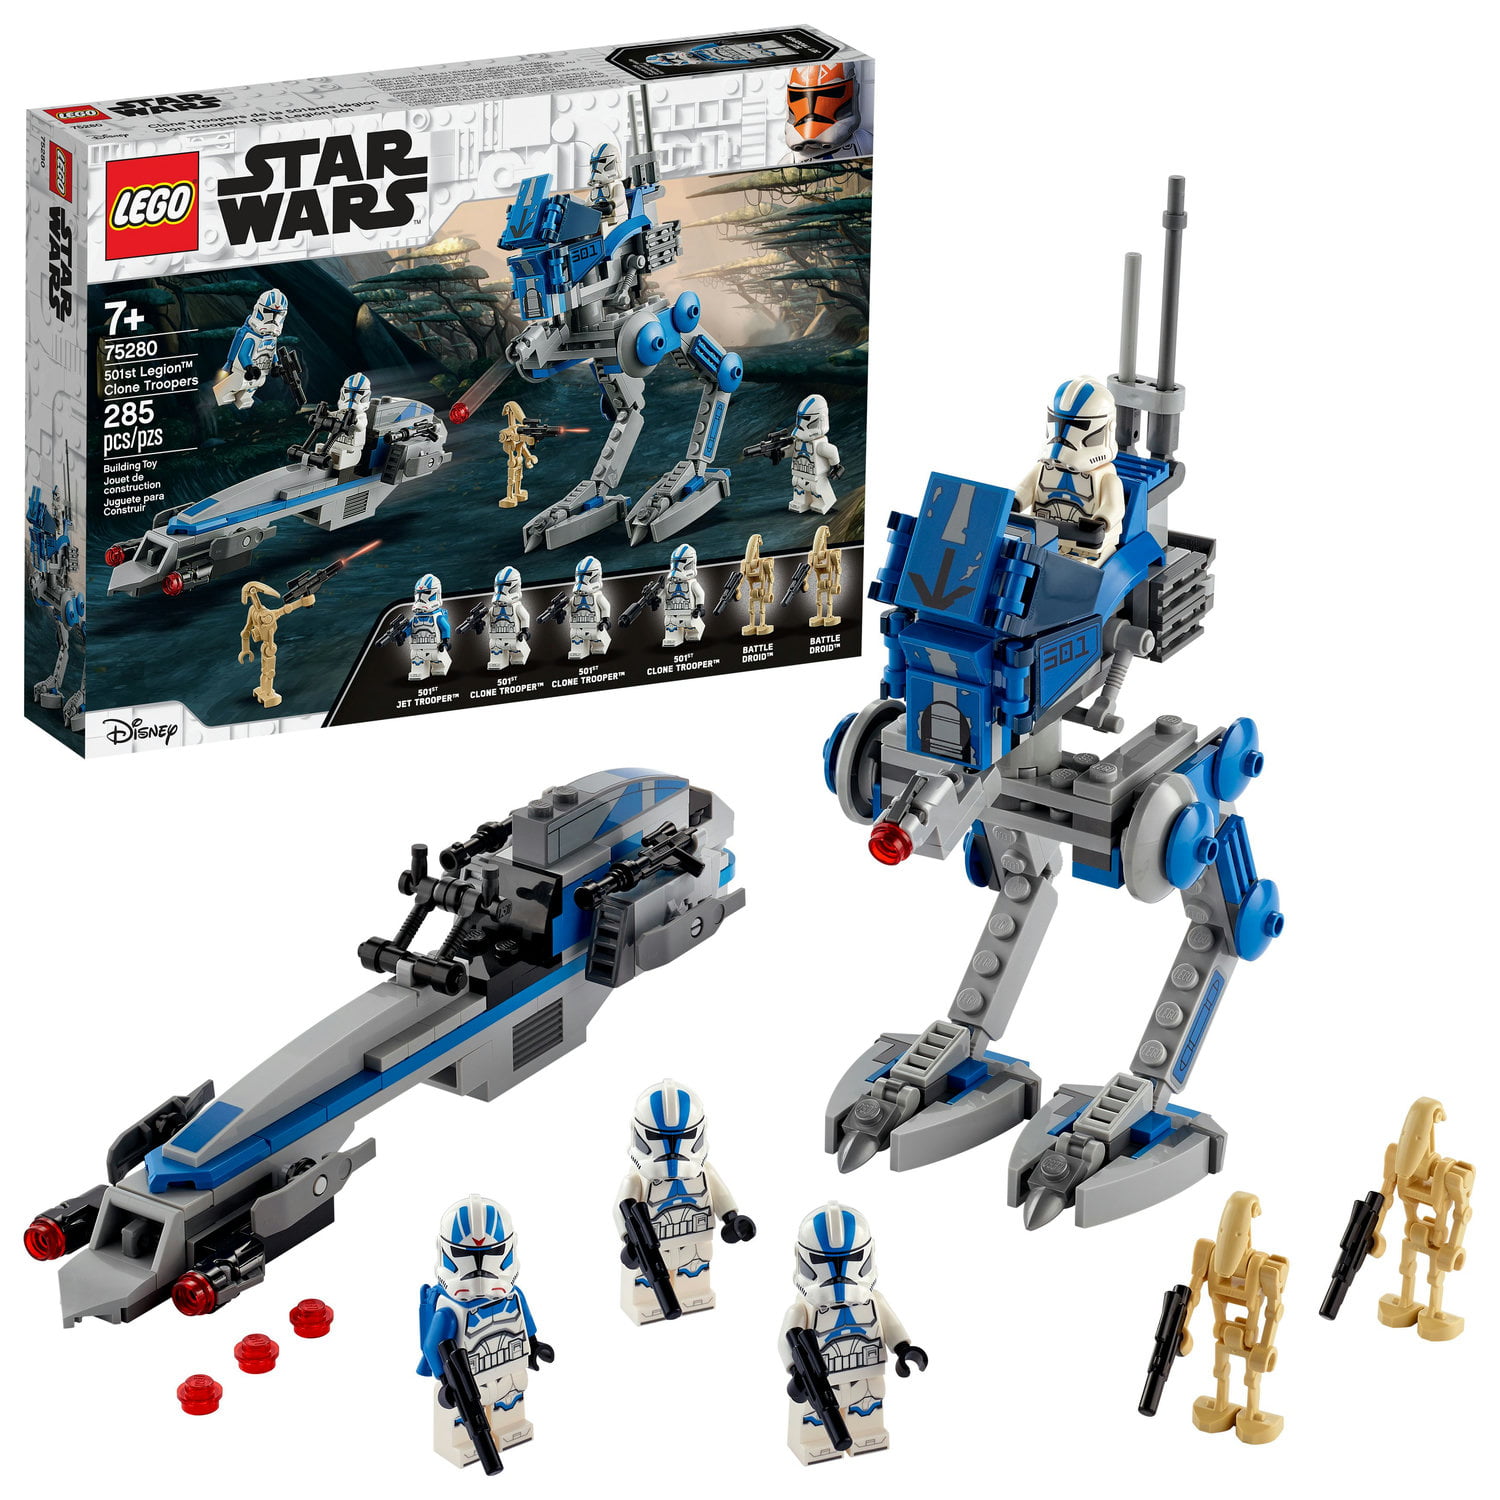 Star Wars TM AAT LEGO Armored Assault Tank for sale online 75283 